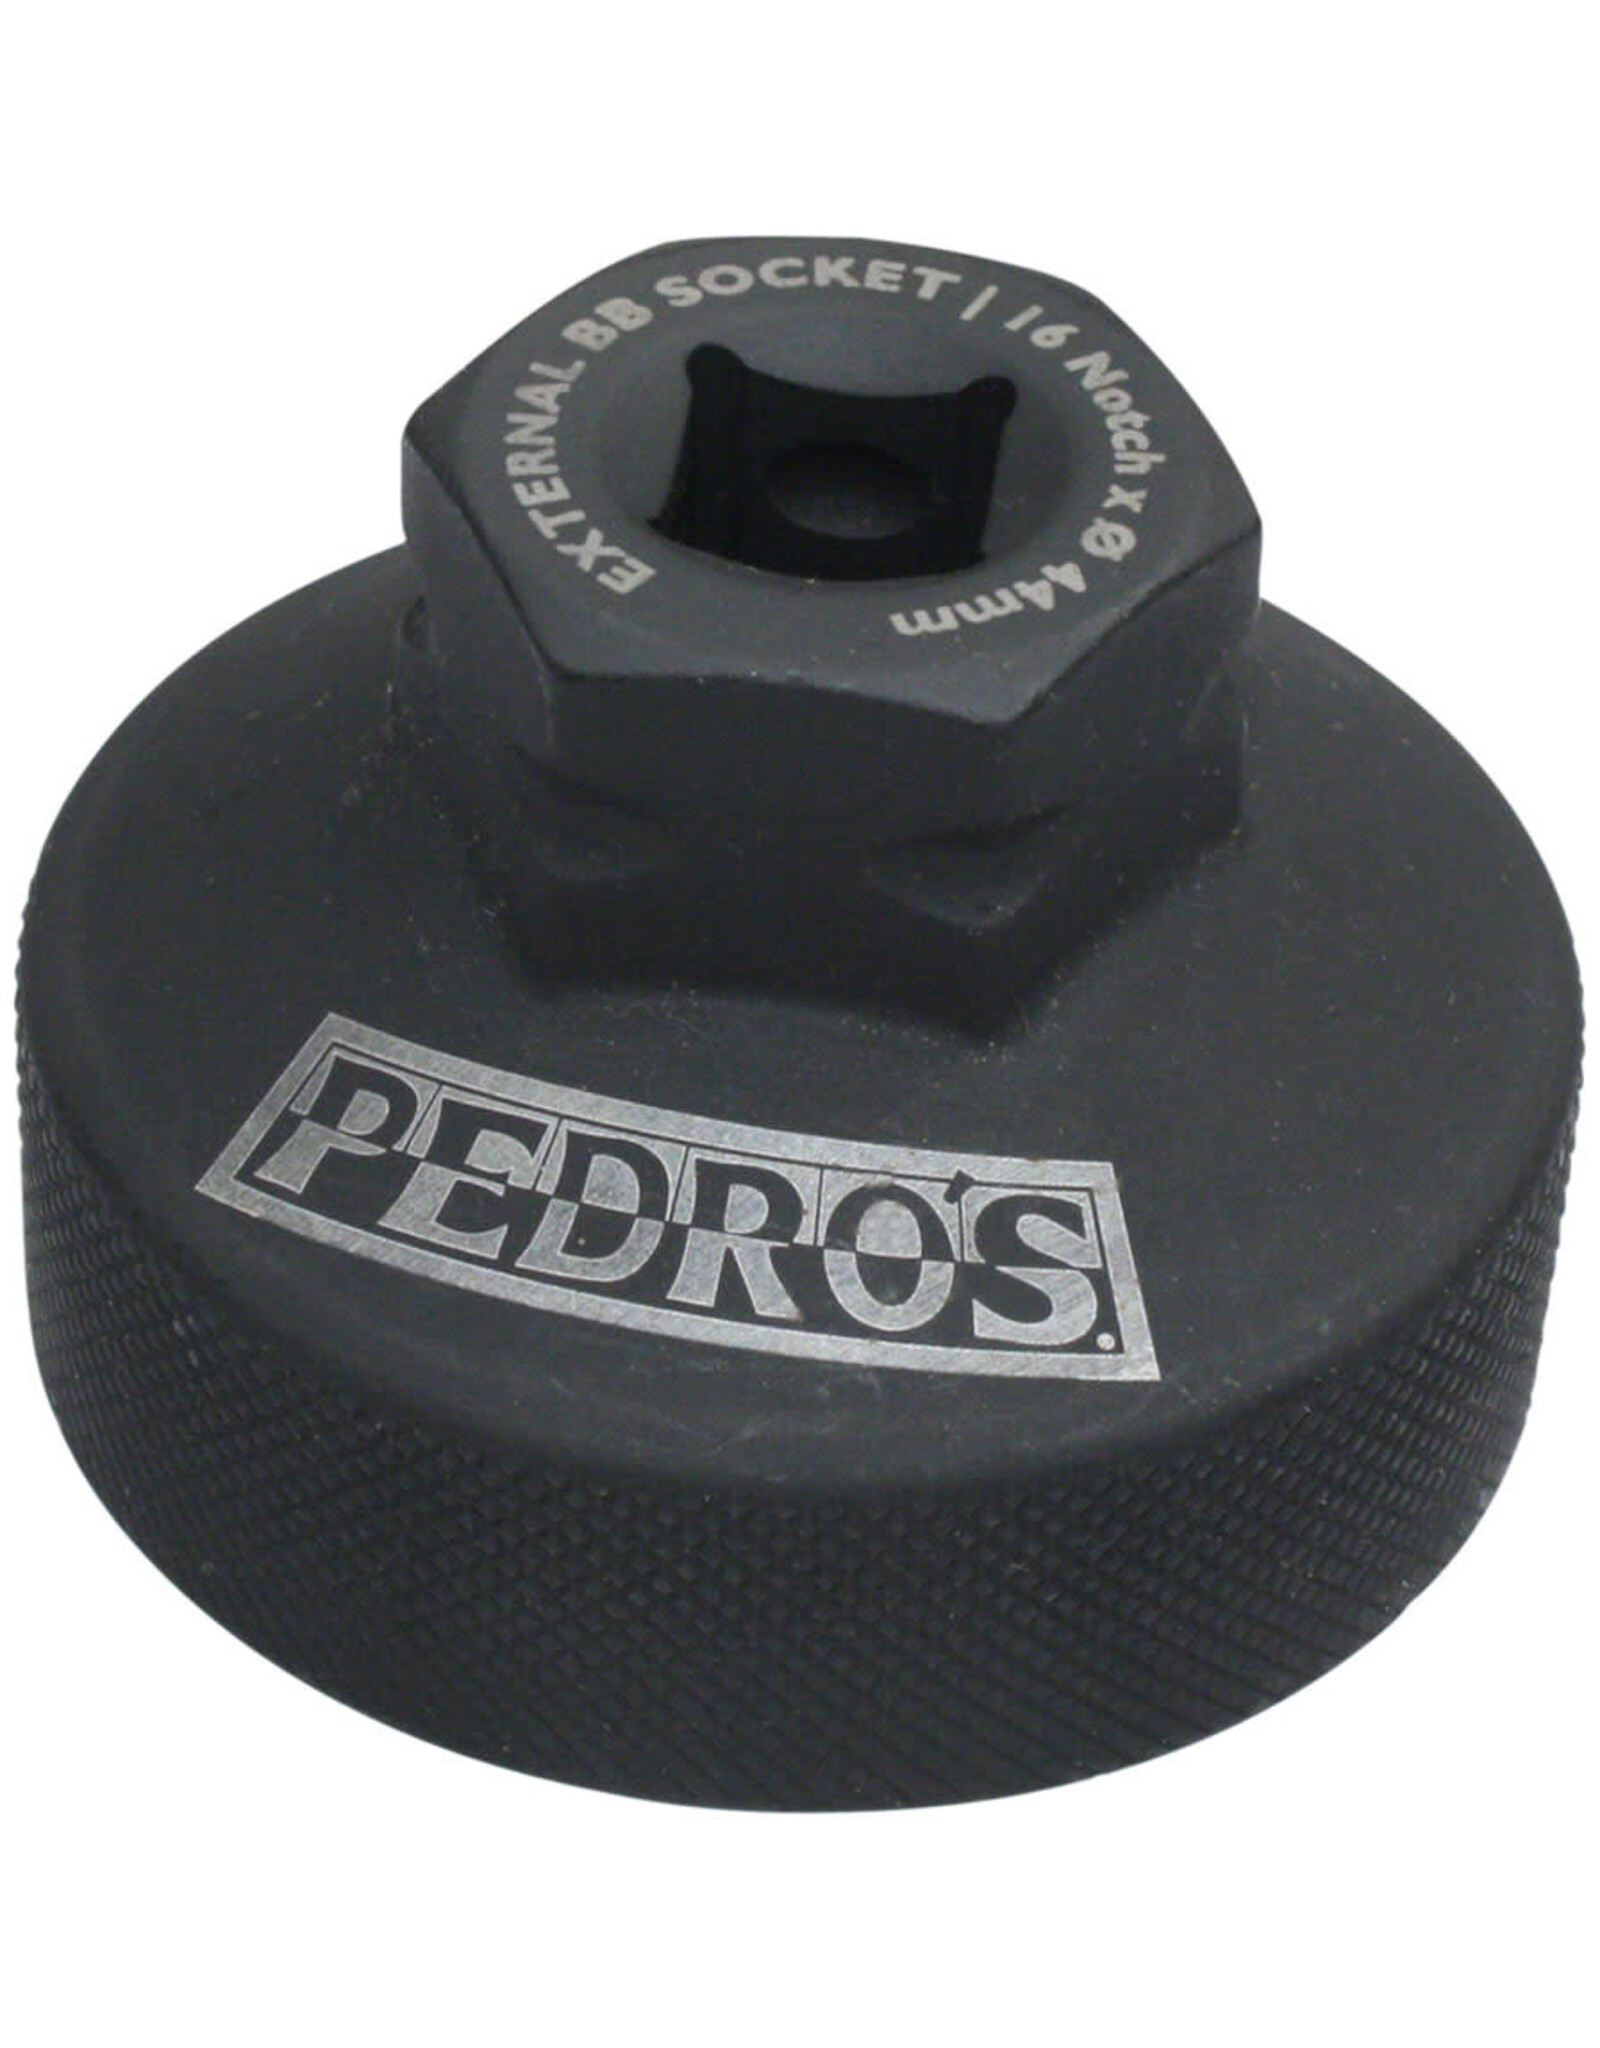 Pedro's Pedro's External Bottom Bracket Socket Tool For 16-Notch External Bearing BB Cups